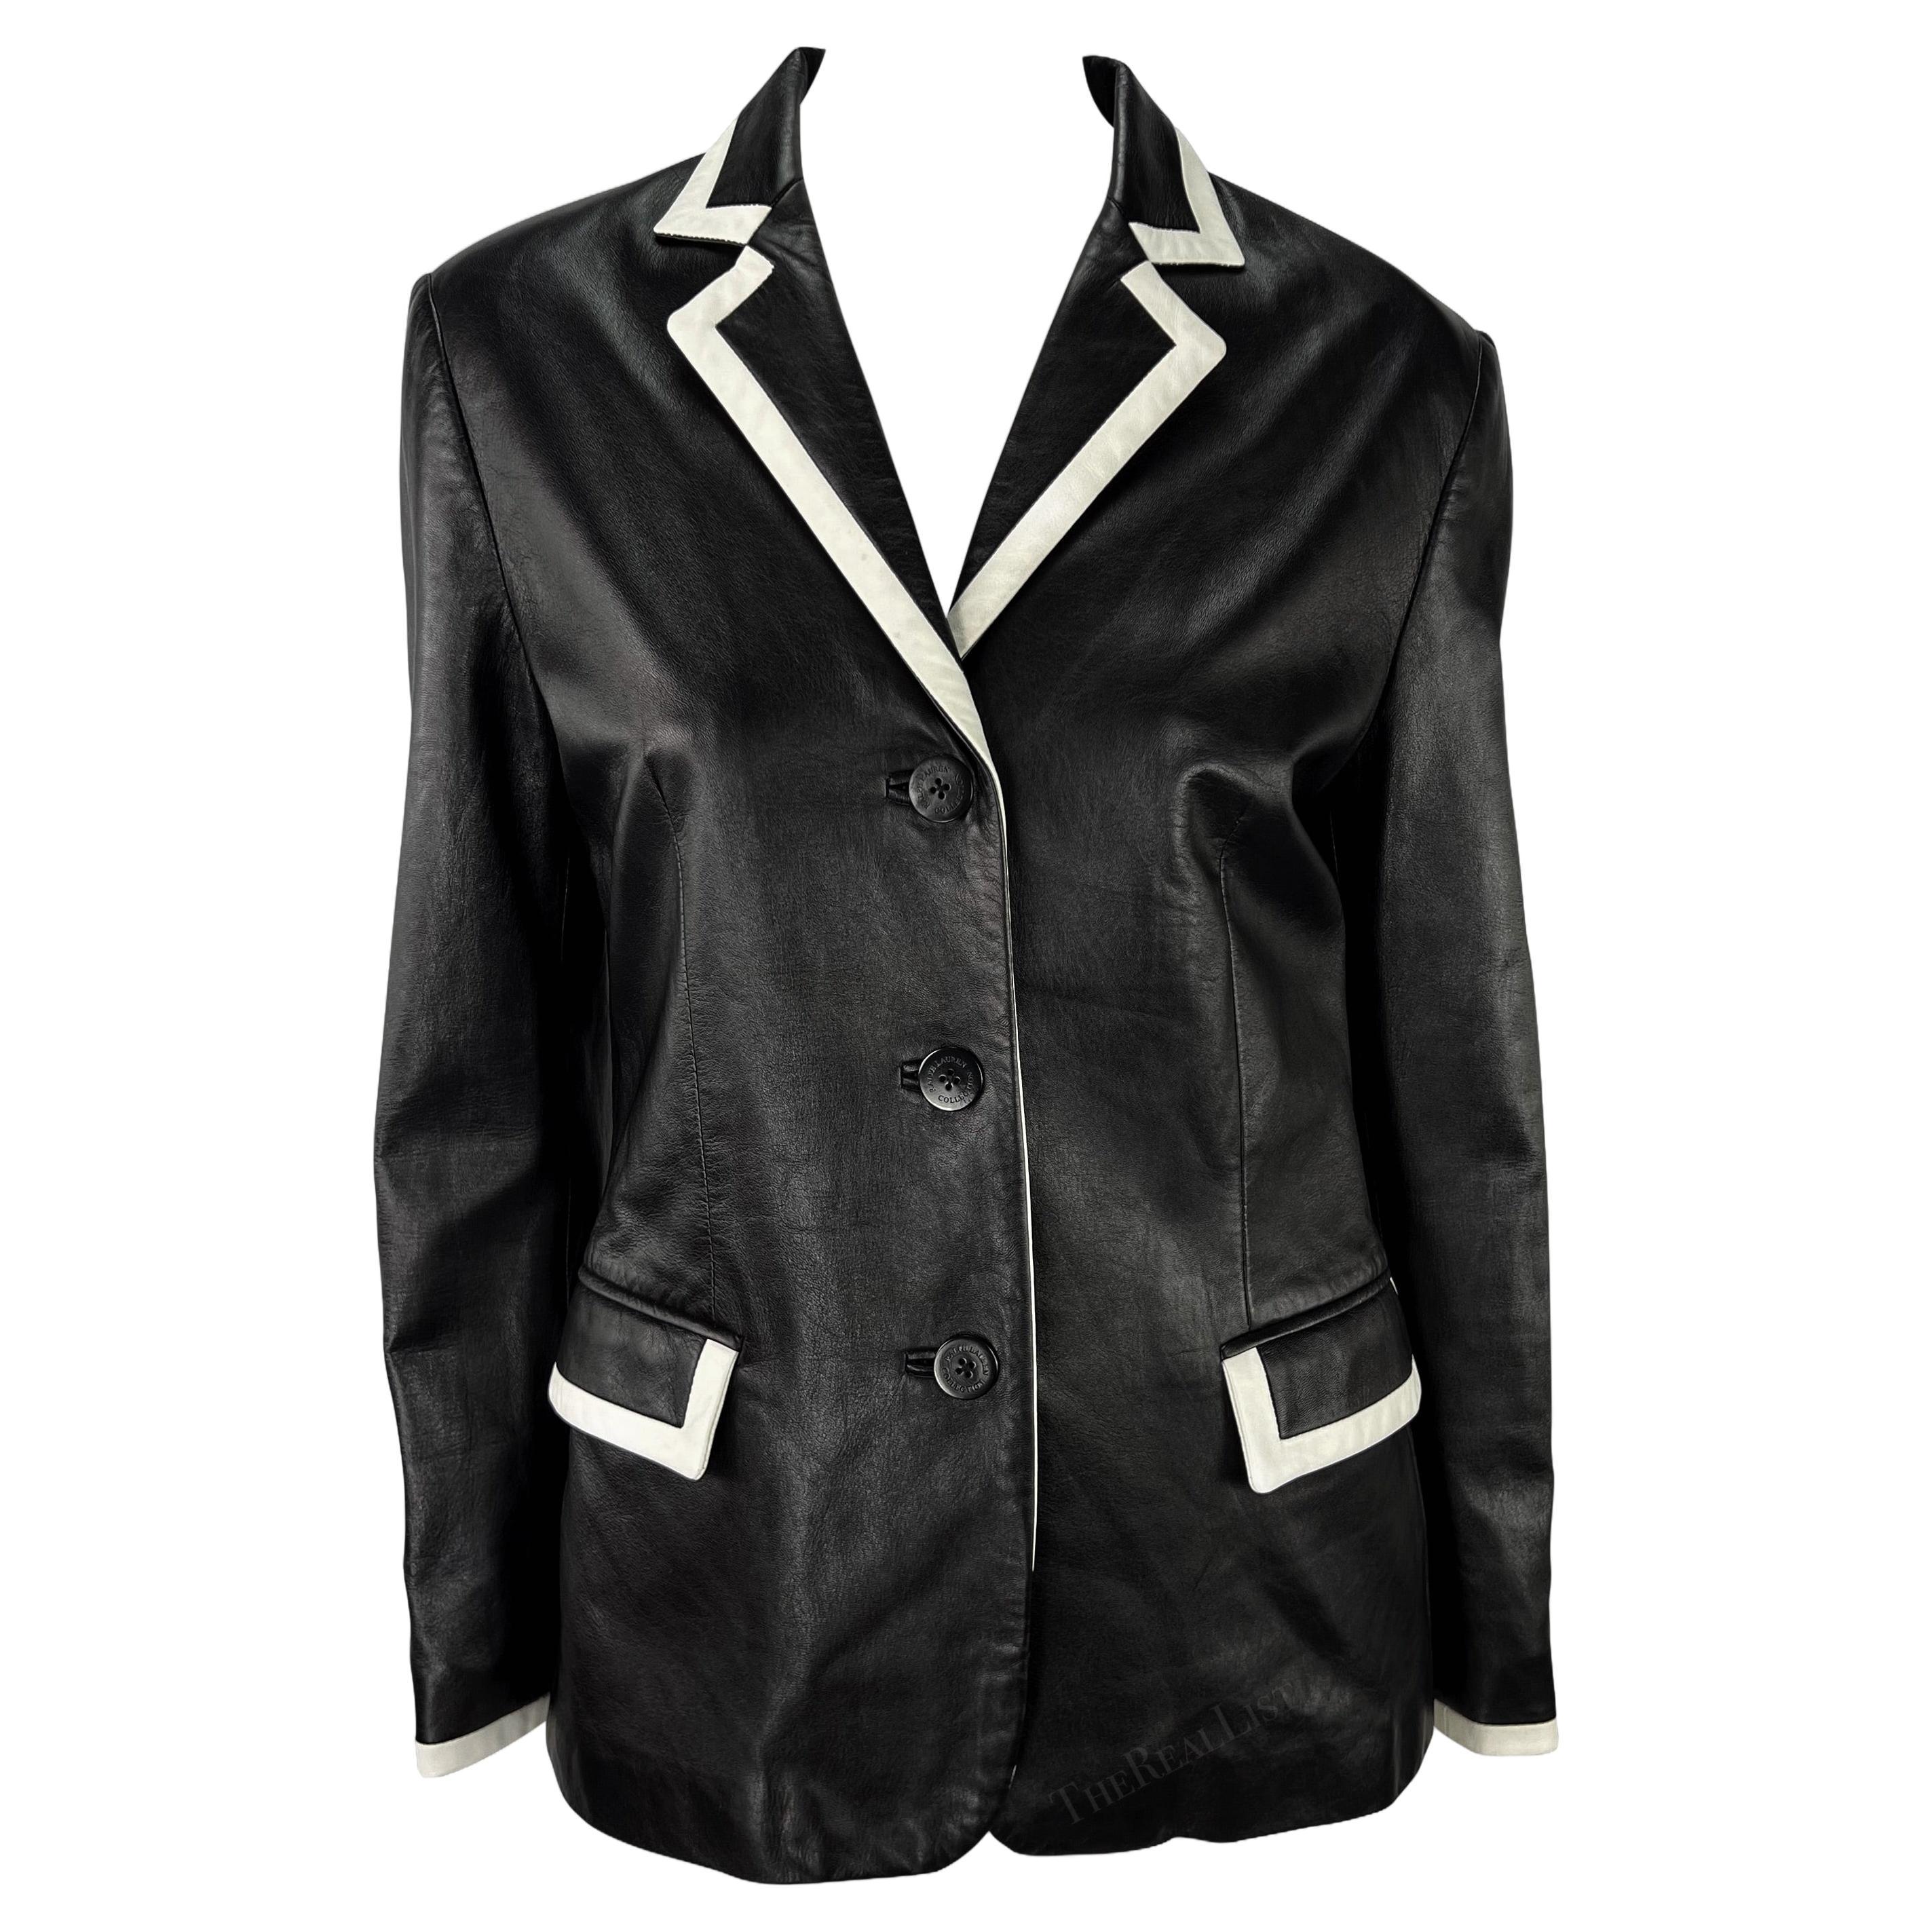 S/S 2001 Ralph Lauren Runway Black Leather White Trim Blazer Jacket For Sale